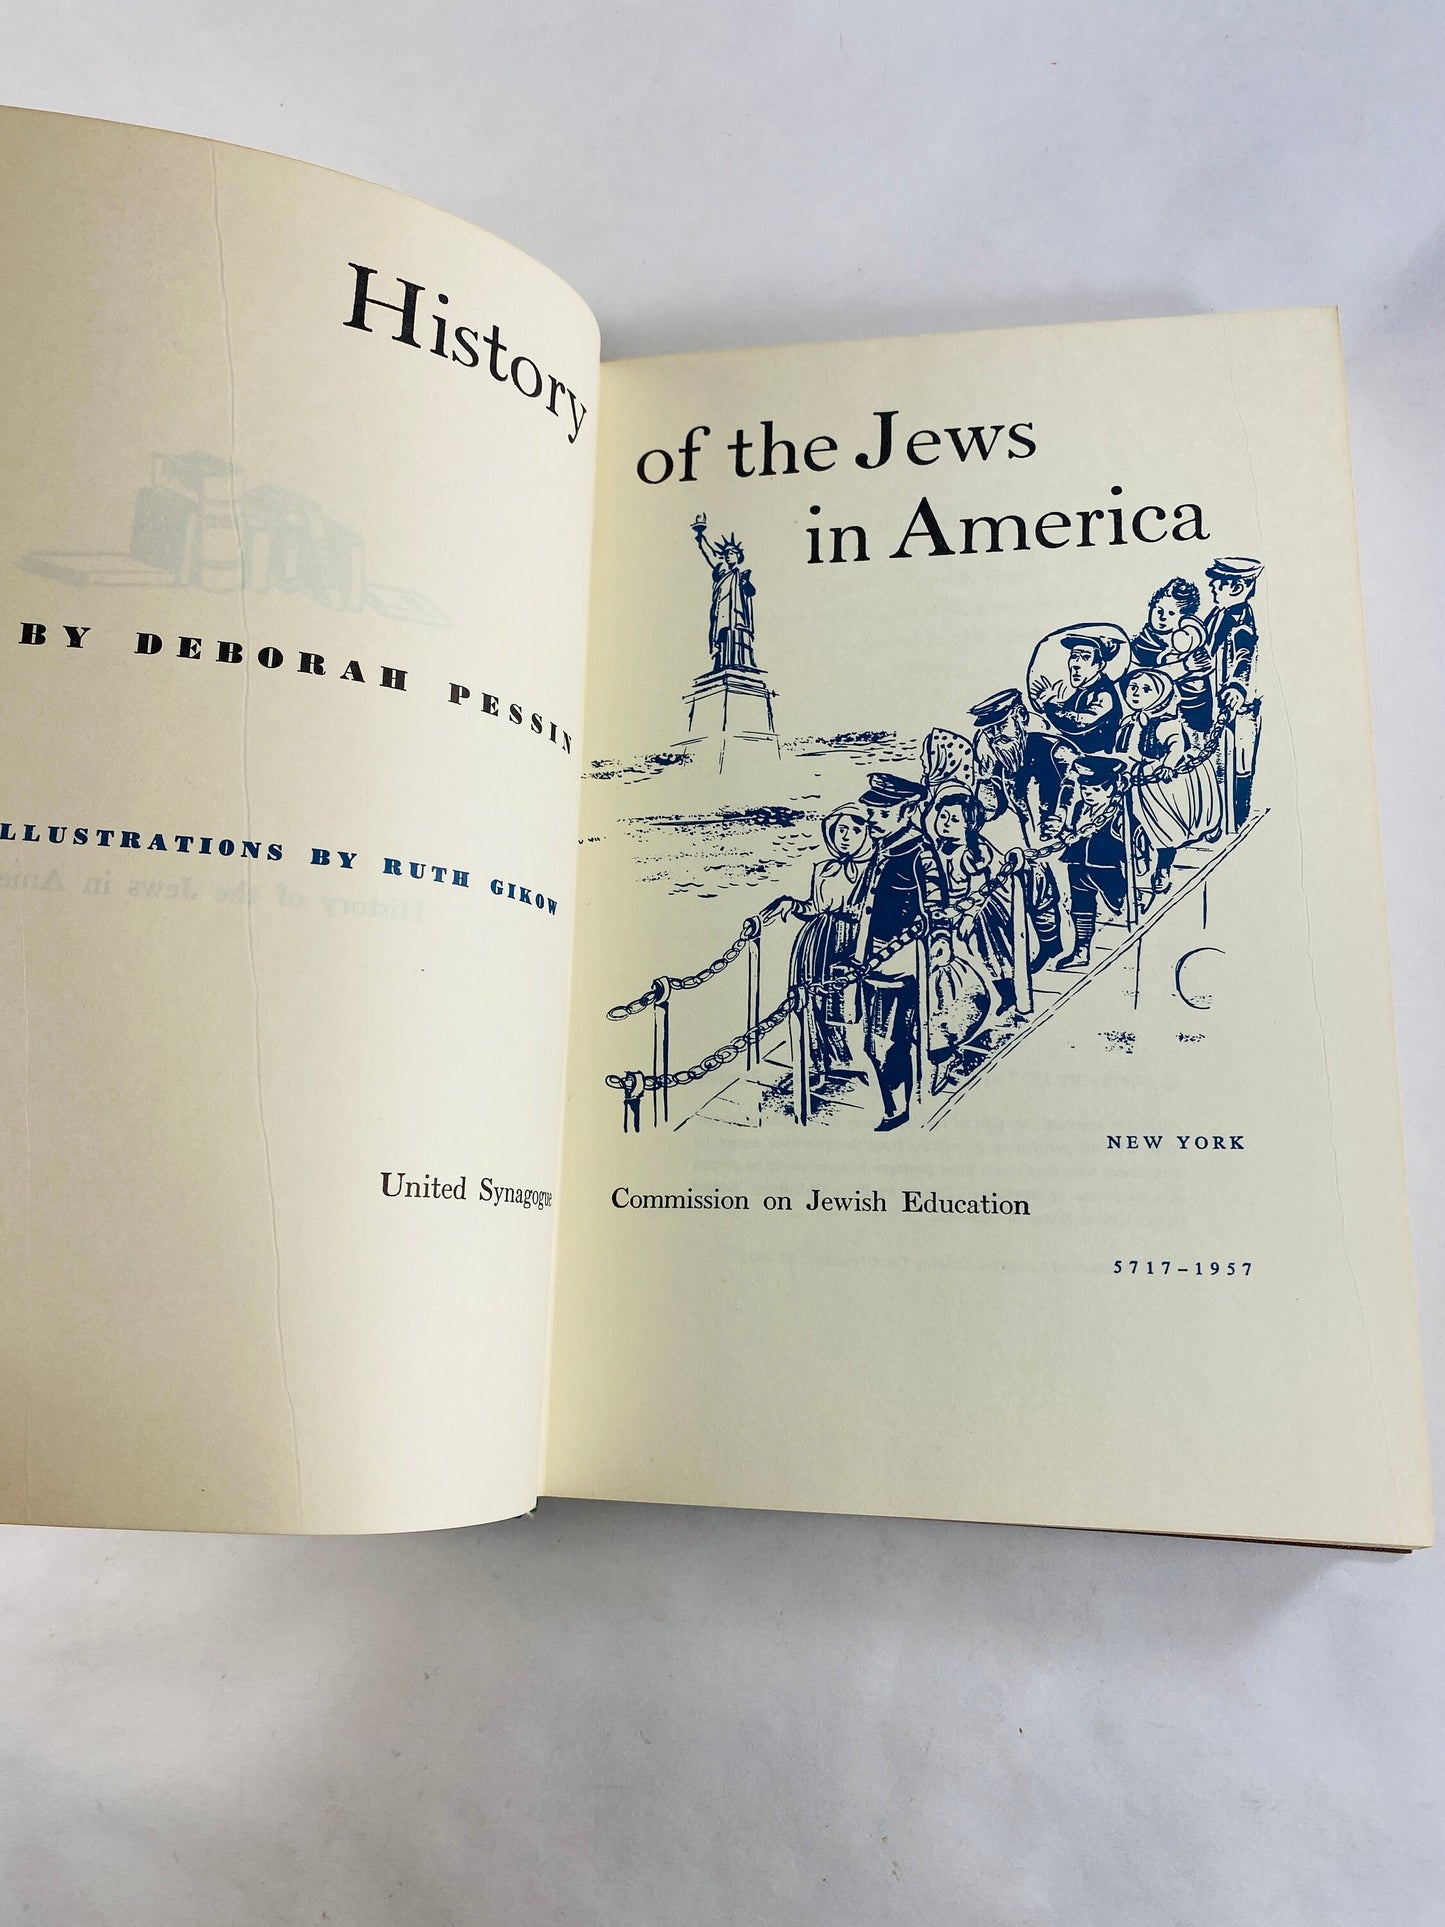 Jews in America vintage book by Deborah Pessin circa 1957 Jewish American intellectual, political structure.